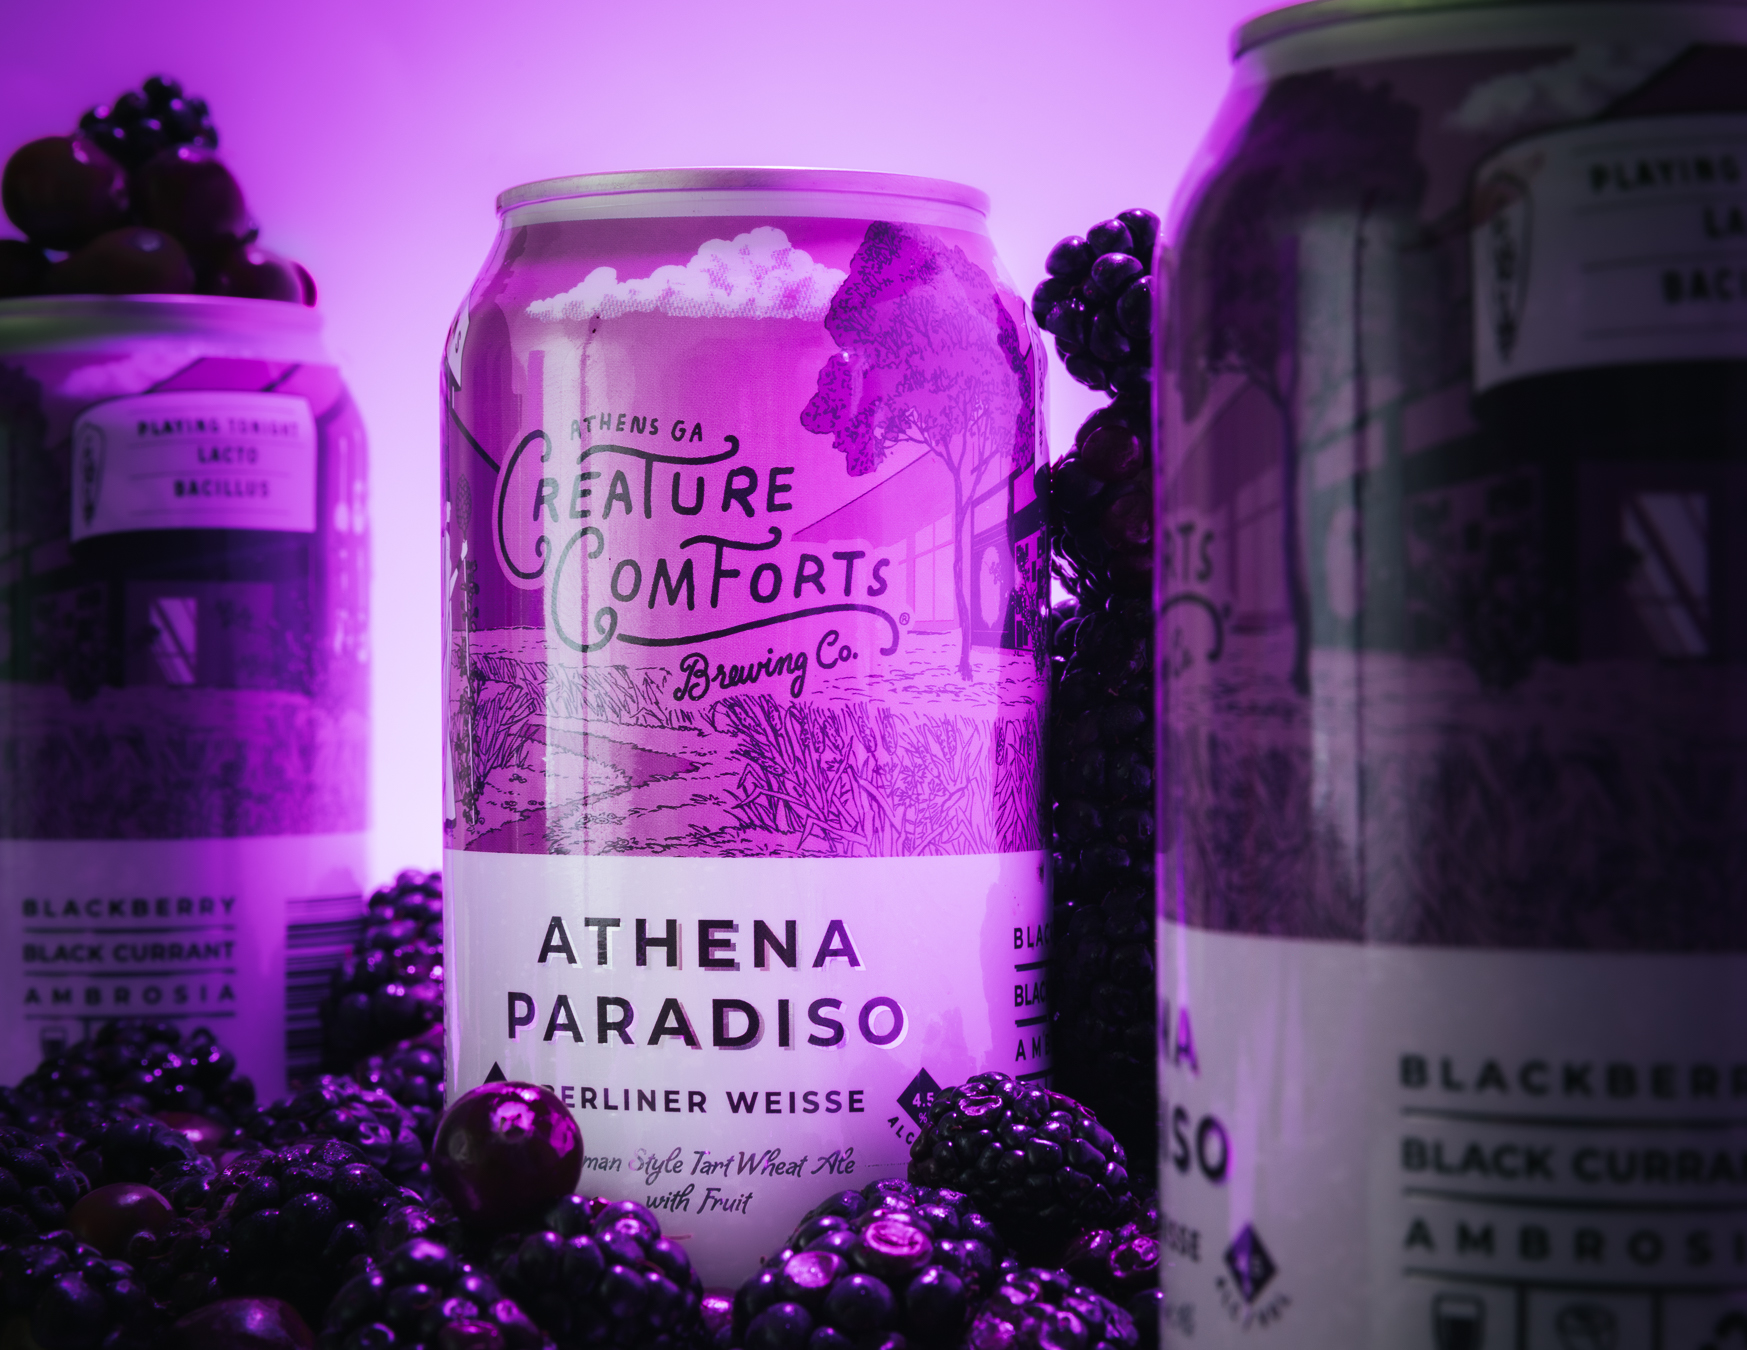 Athena Paradiso with blackberries & black currant